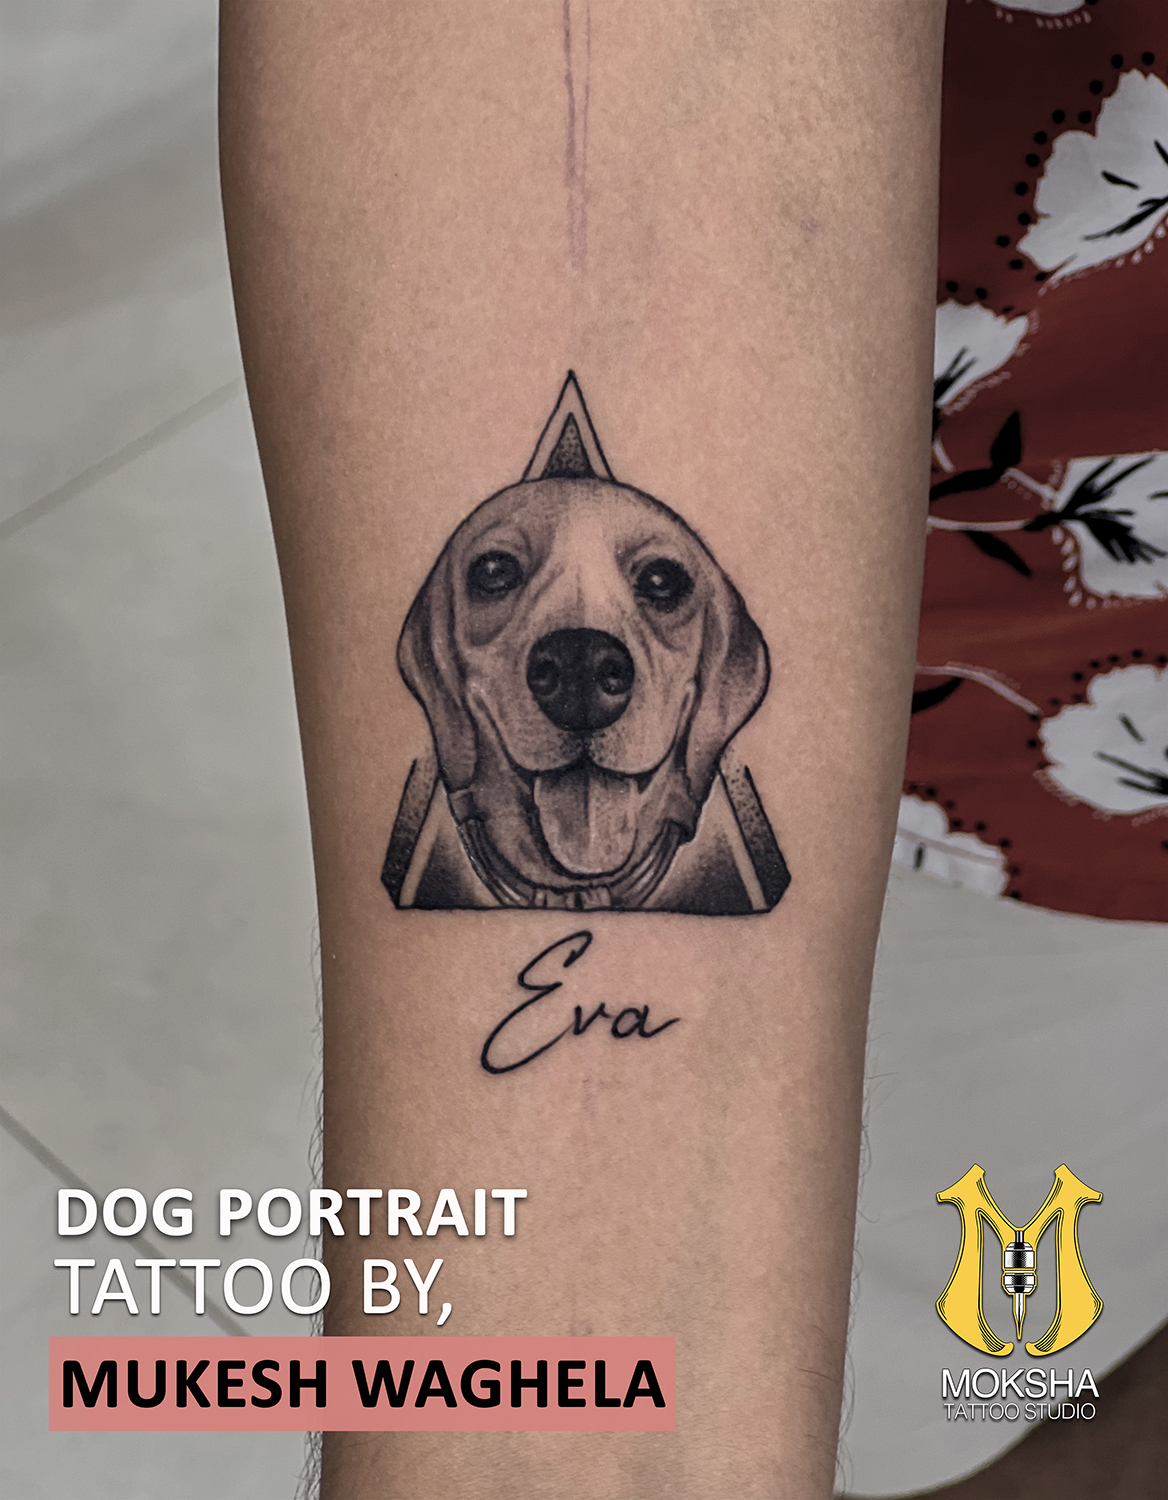 Dog Portrait Tattoo By Mukesh Waghela Best Tattoo Artist In Goa At Moksha Tattoo Studio Goa India.